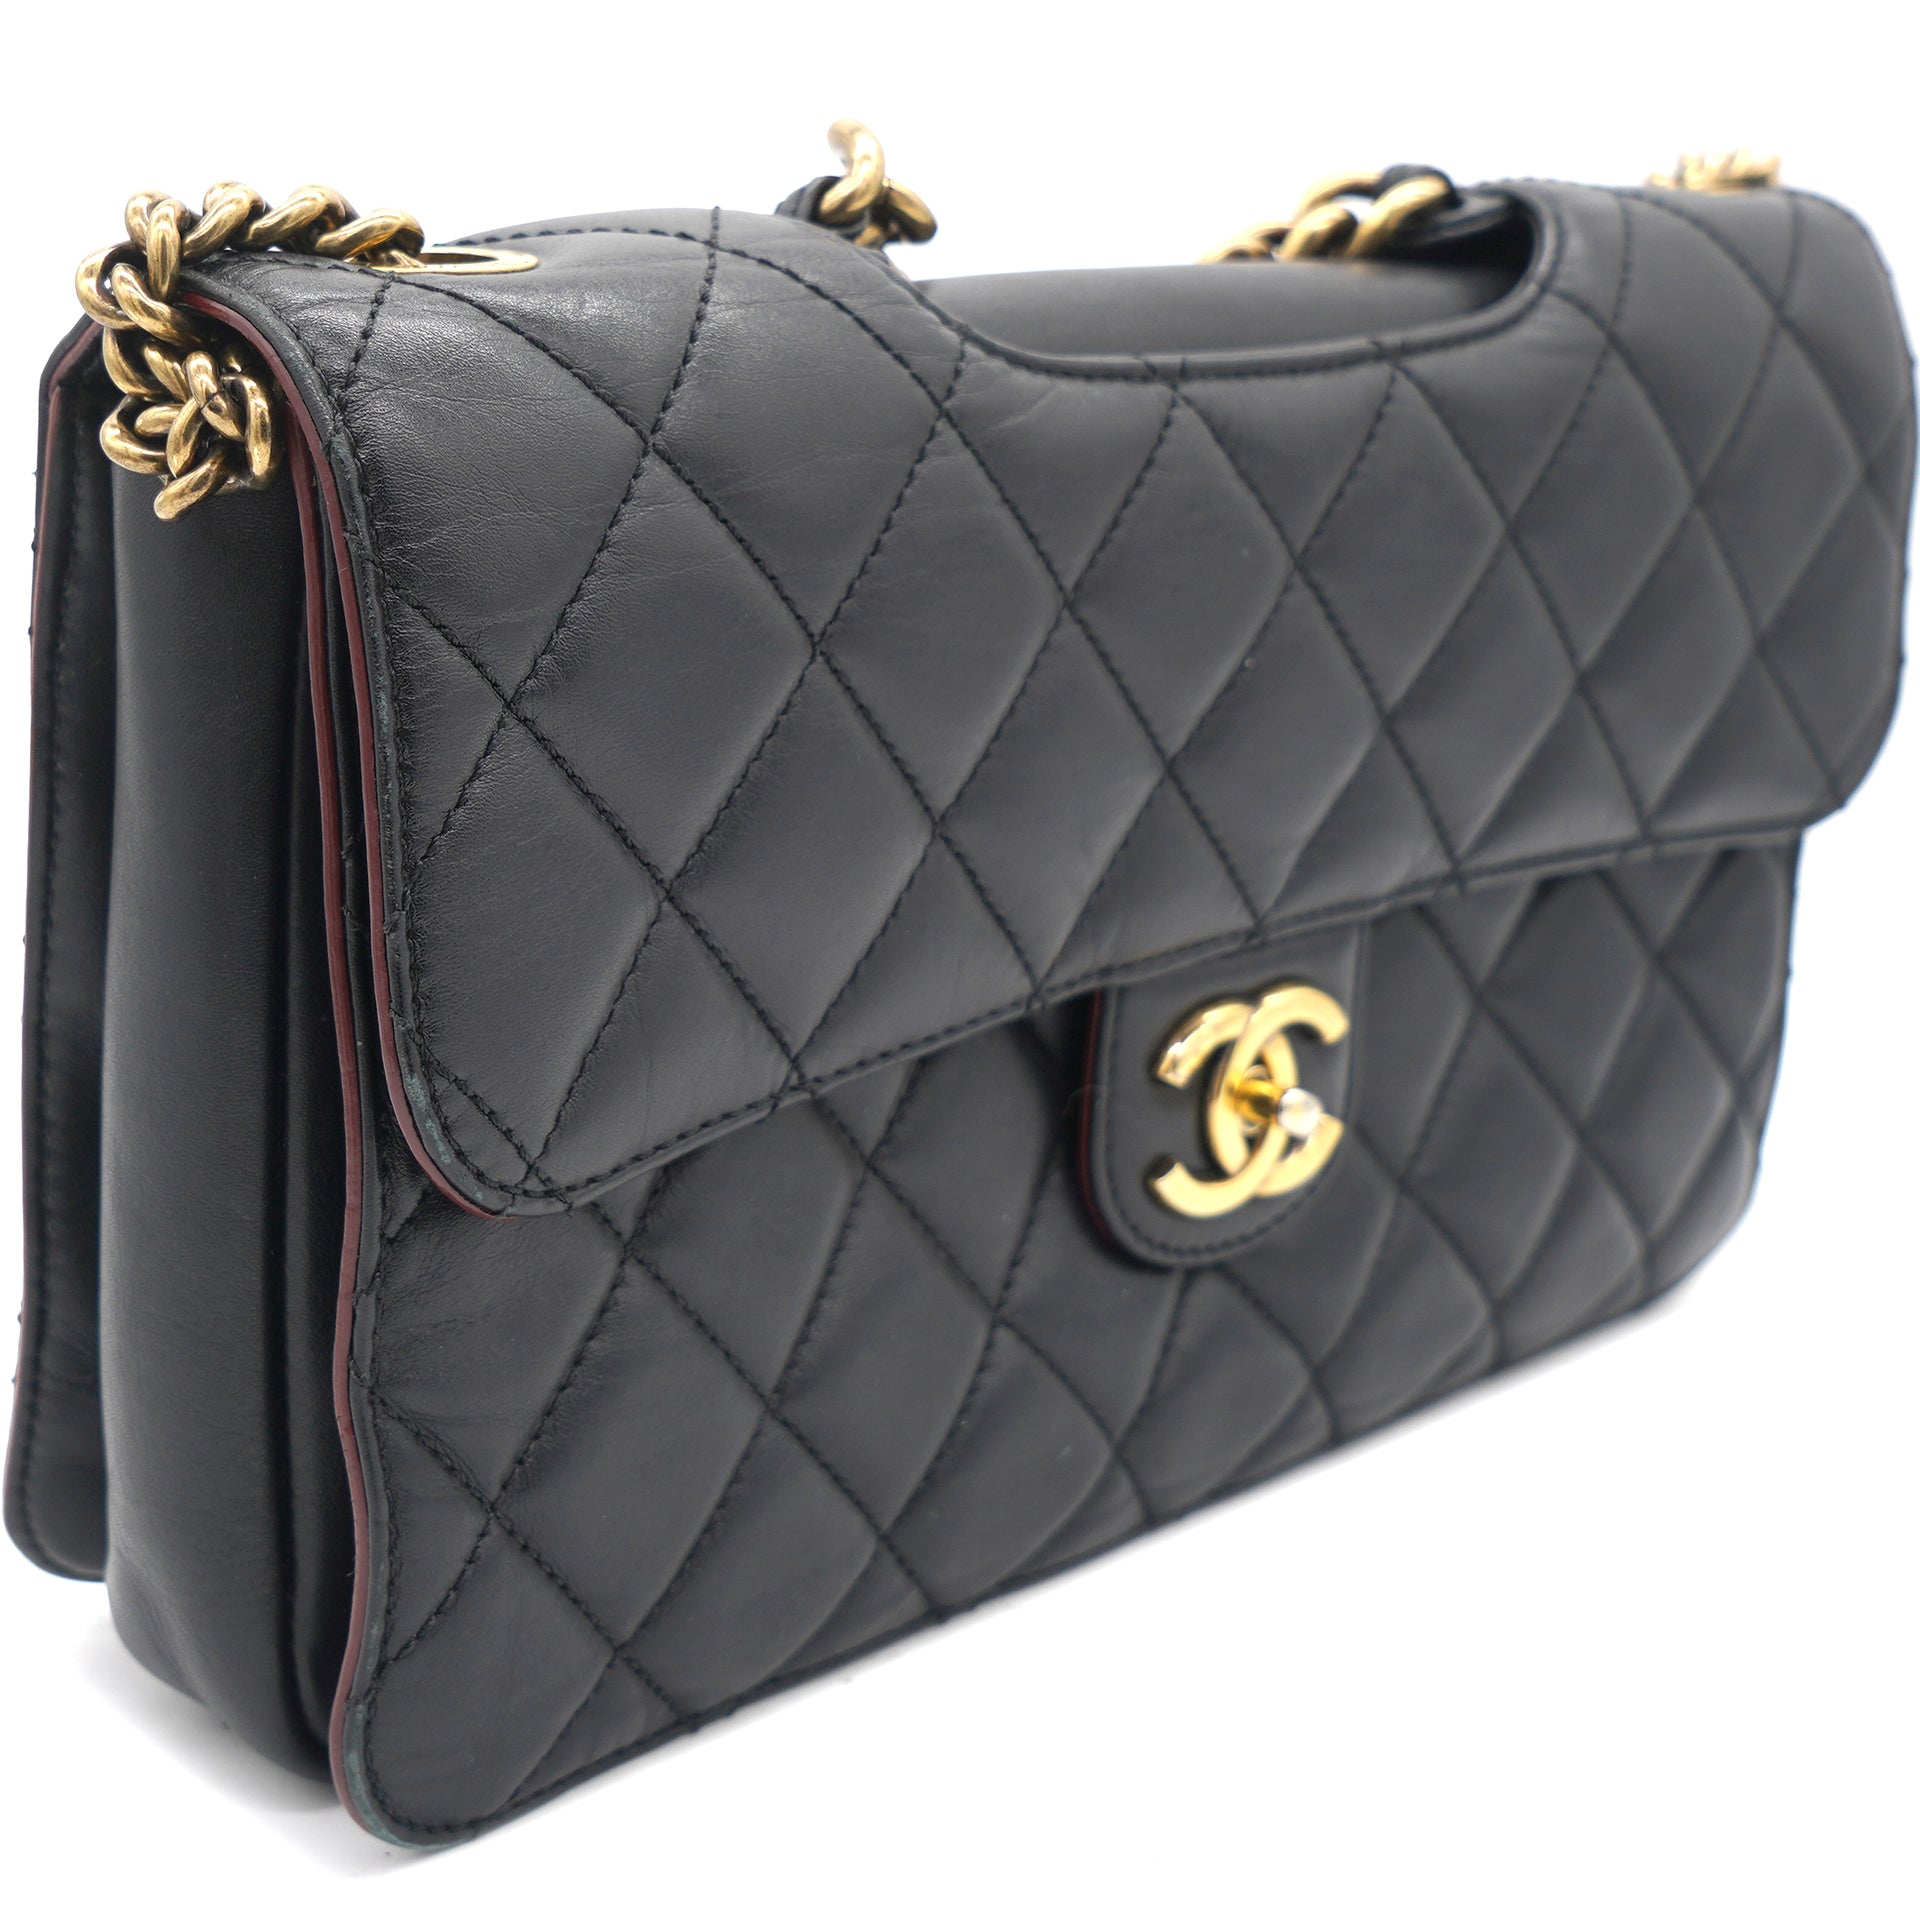 Chanel Black Leather Medium Essential Rue Cambon Shopping Bag Chanel